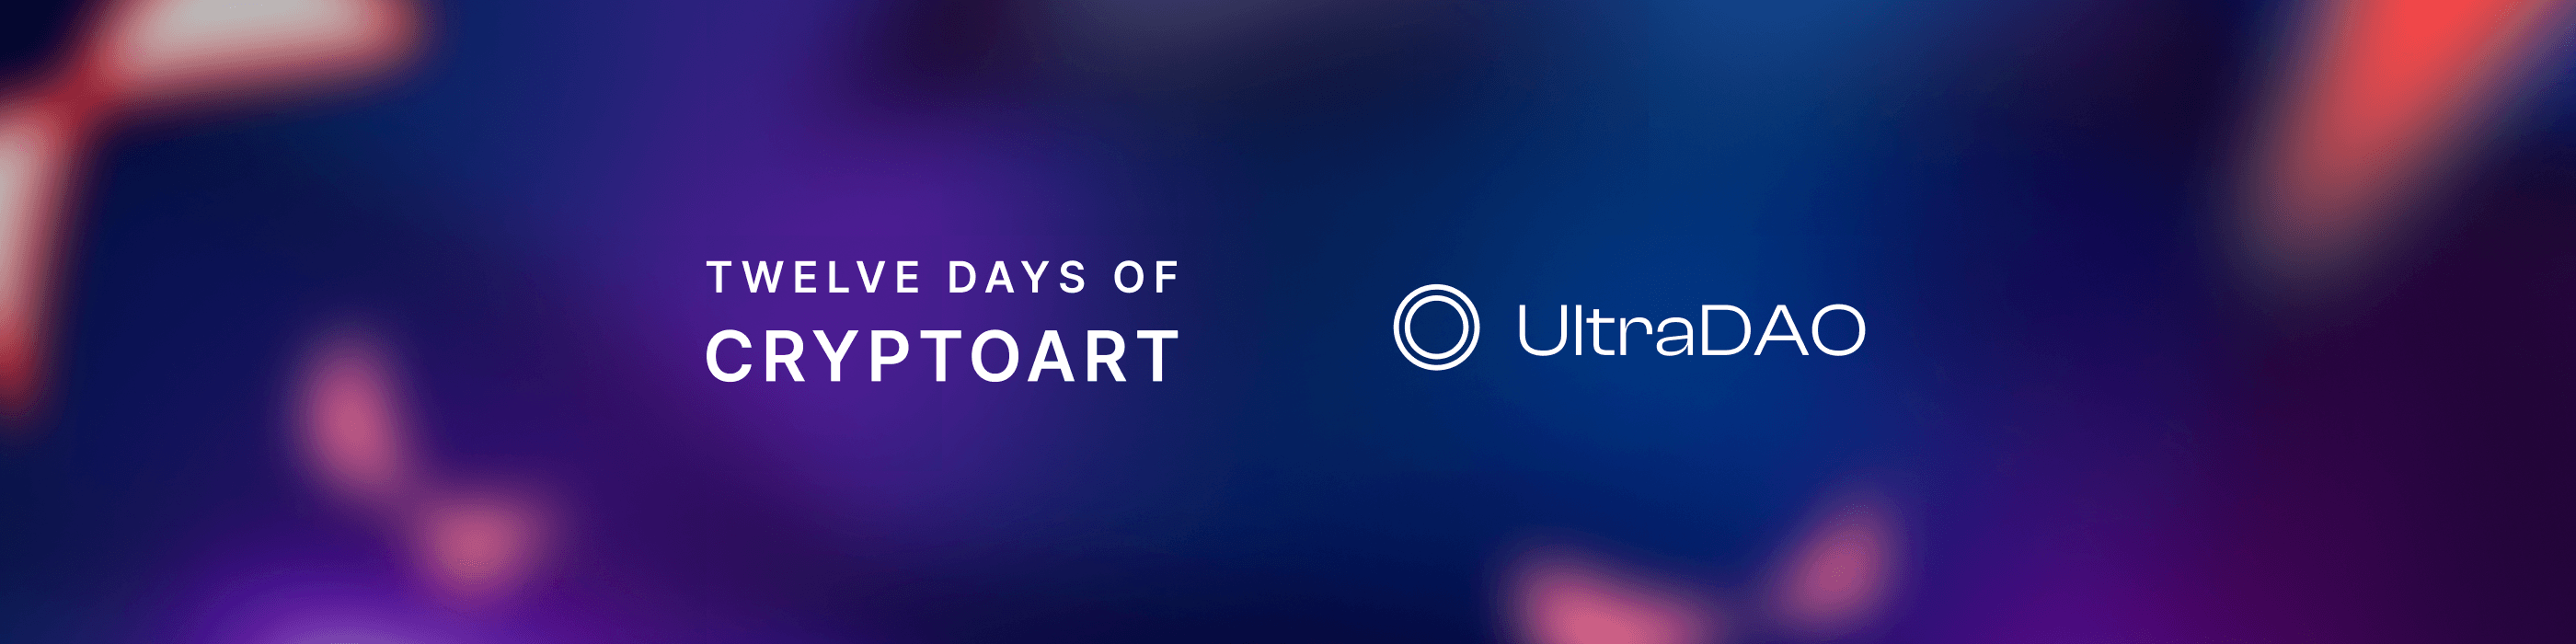 Twelve Days of CryptoArt by UltraDAO